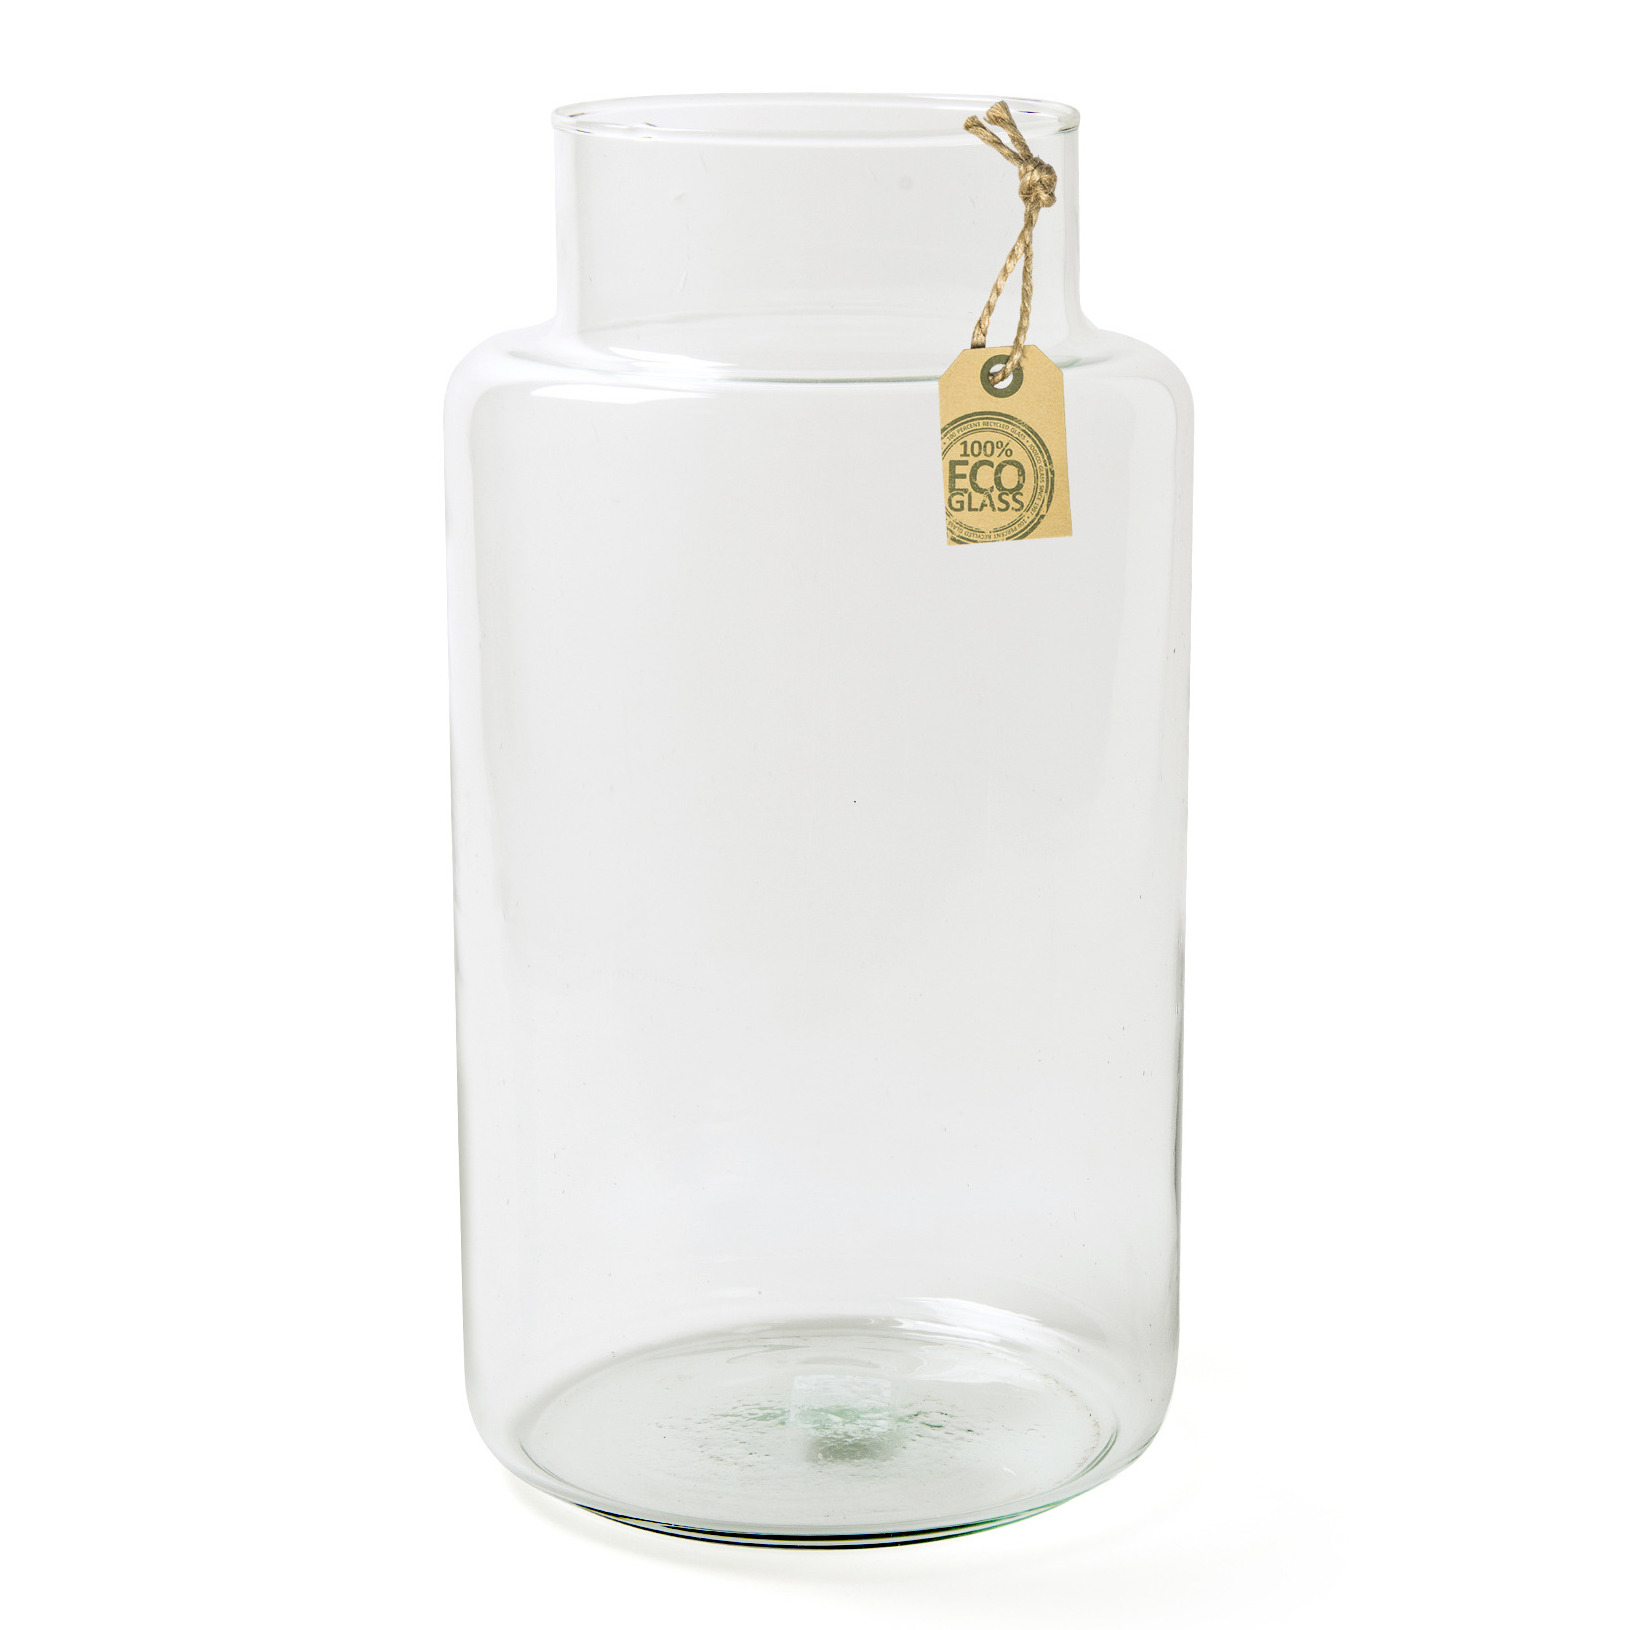 Merkloos Transparante melkbus vaas/vazen van eco glas 19 x 35 cm -